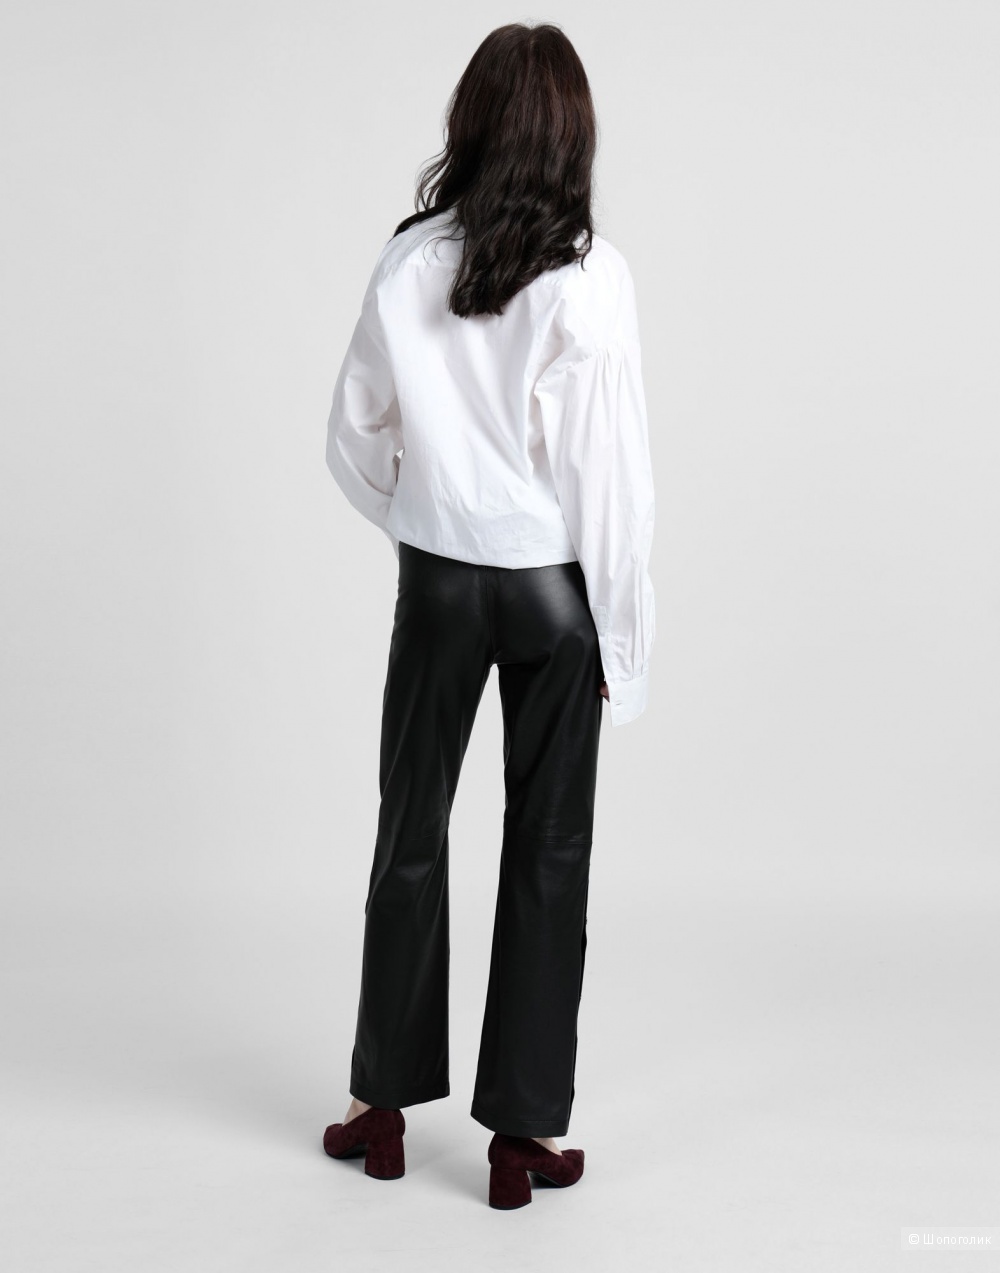 Кожаные женские брюки "8 by YOOX". Размер М.